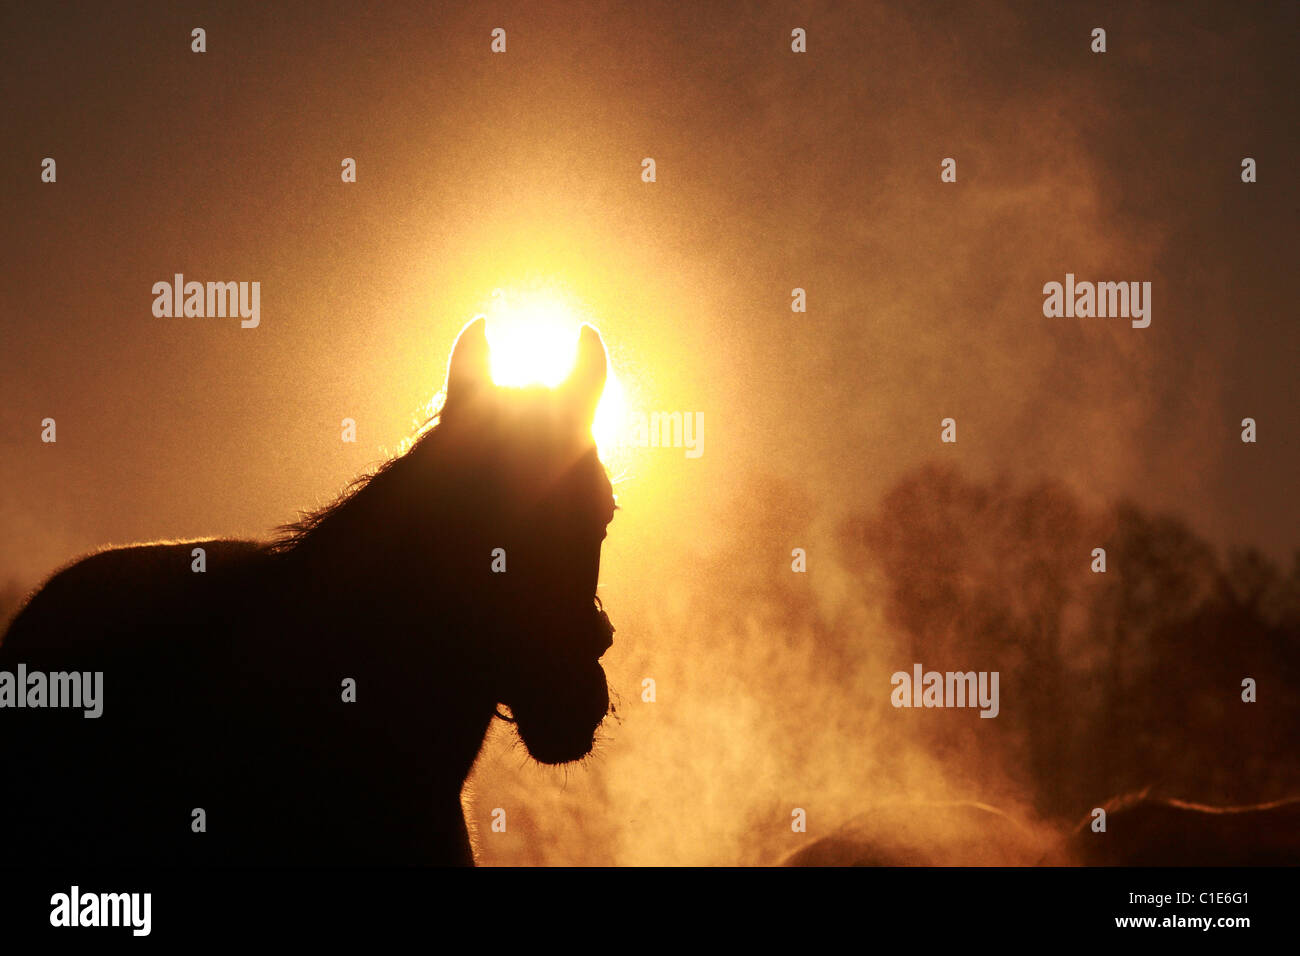 Silhouette of horse at sunrise, Goerlsdorf, Germany Stock Photo